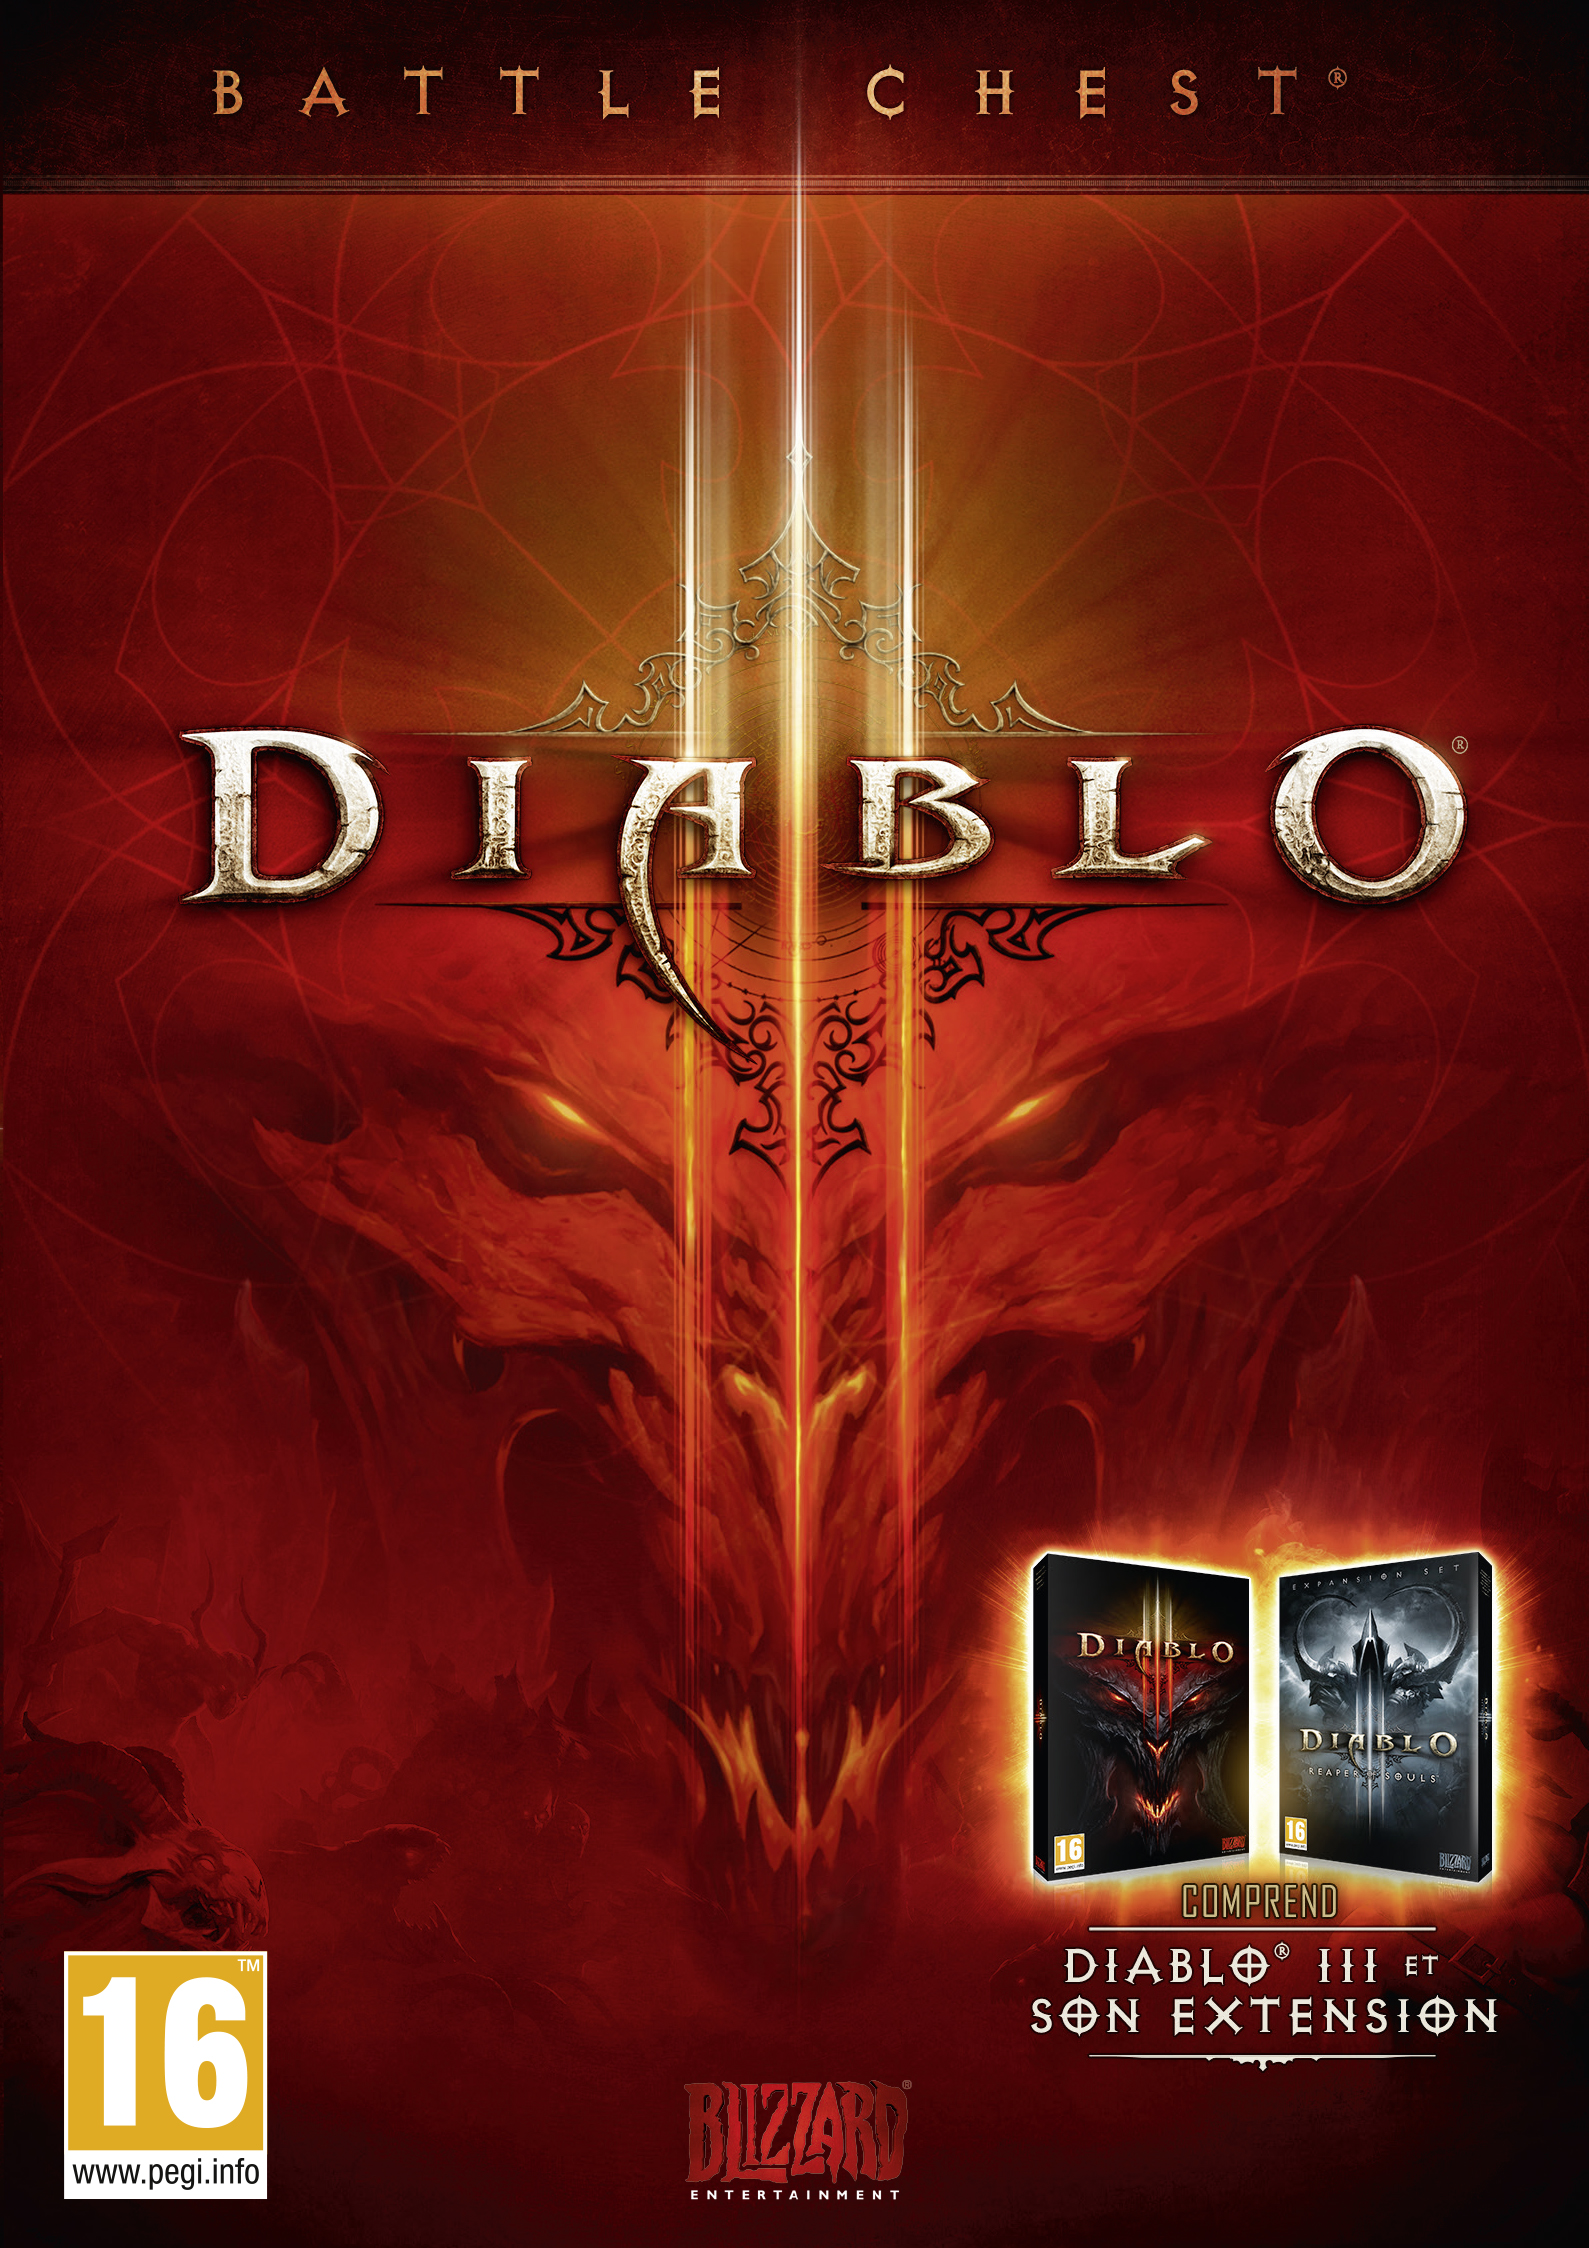 Diablo III Battlechest (PC), Blizzard Entertainment